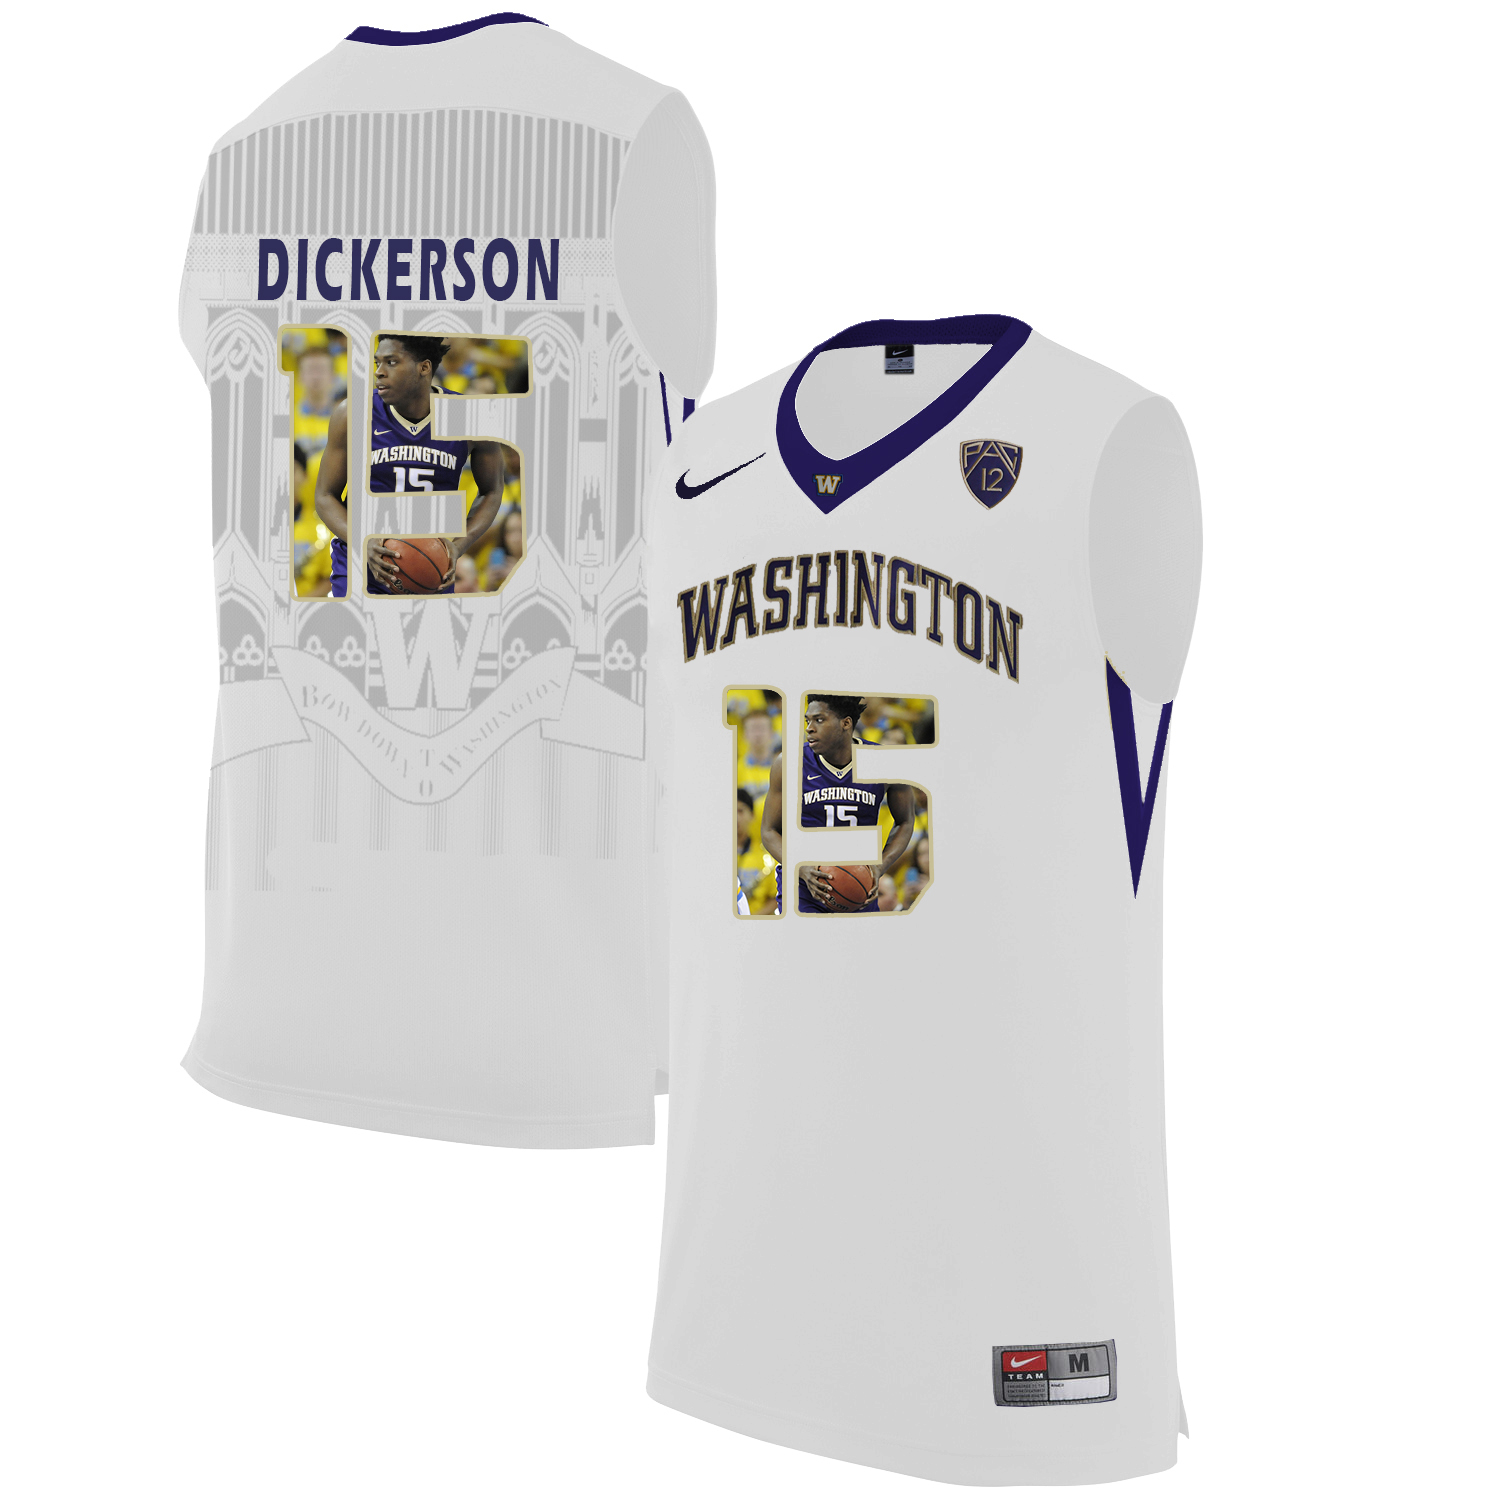 Washington Huskies 15 Noah Dickerson White With Portait College Basketball Jersey